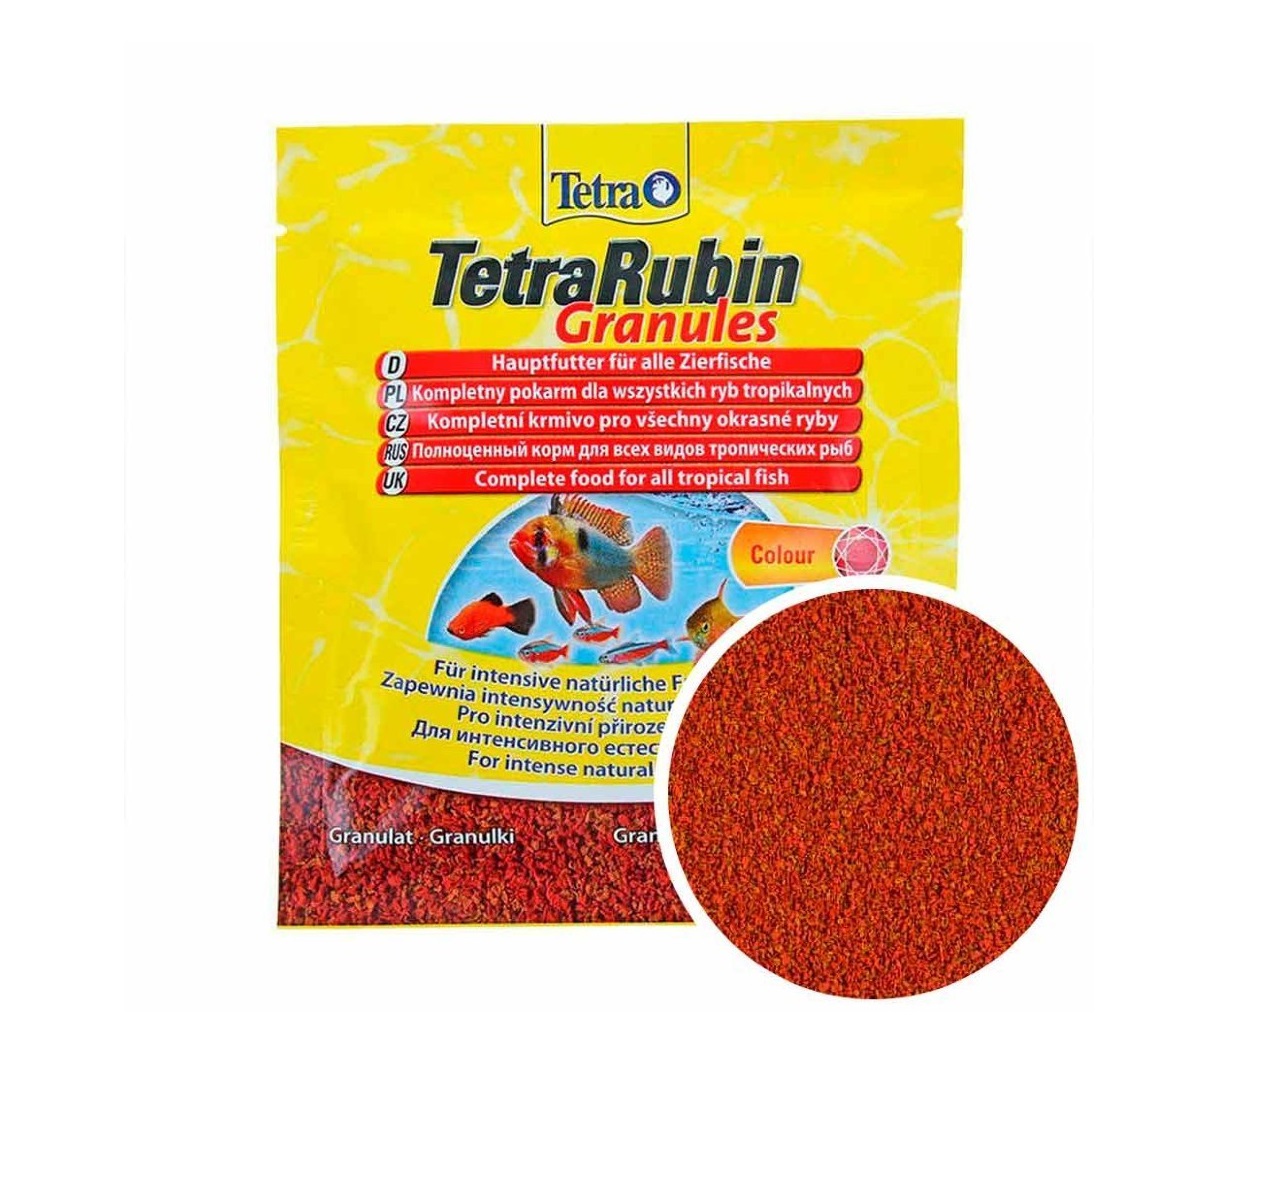 Тетра Рубин 15гр (Rubin Granules) - Гранулы для Окраса, для всех видов рыб (Tetra)